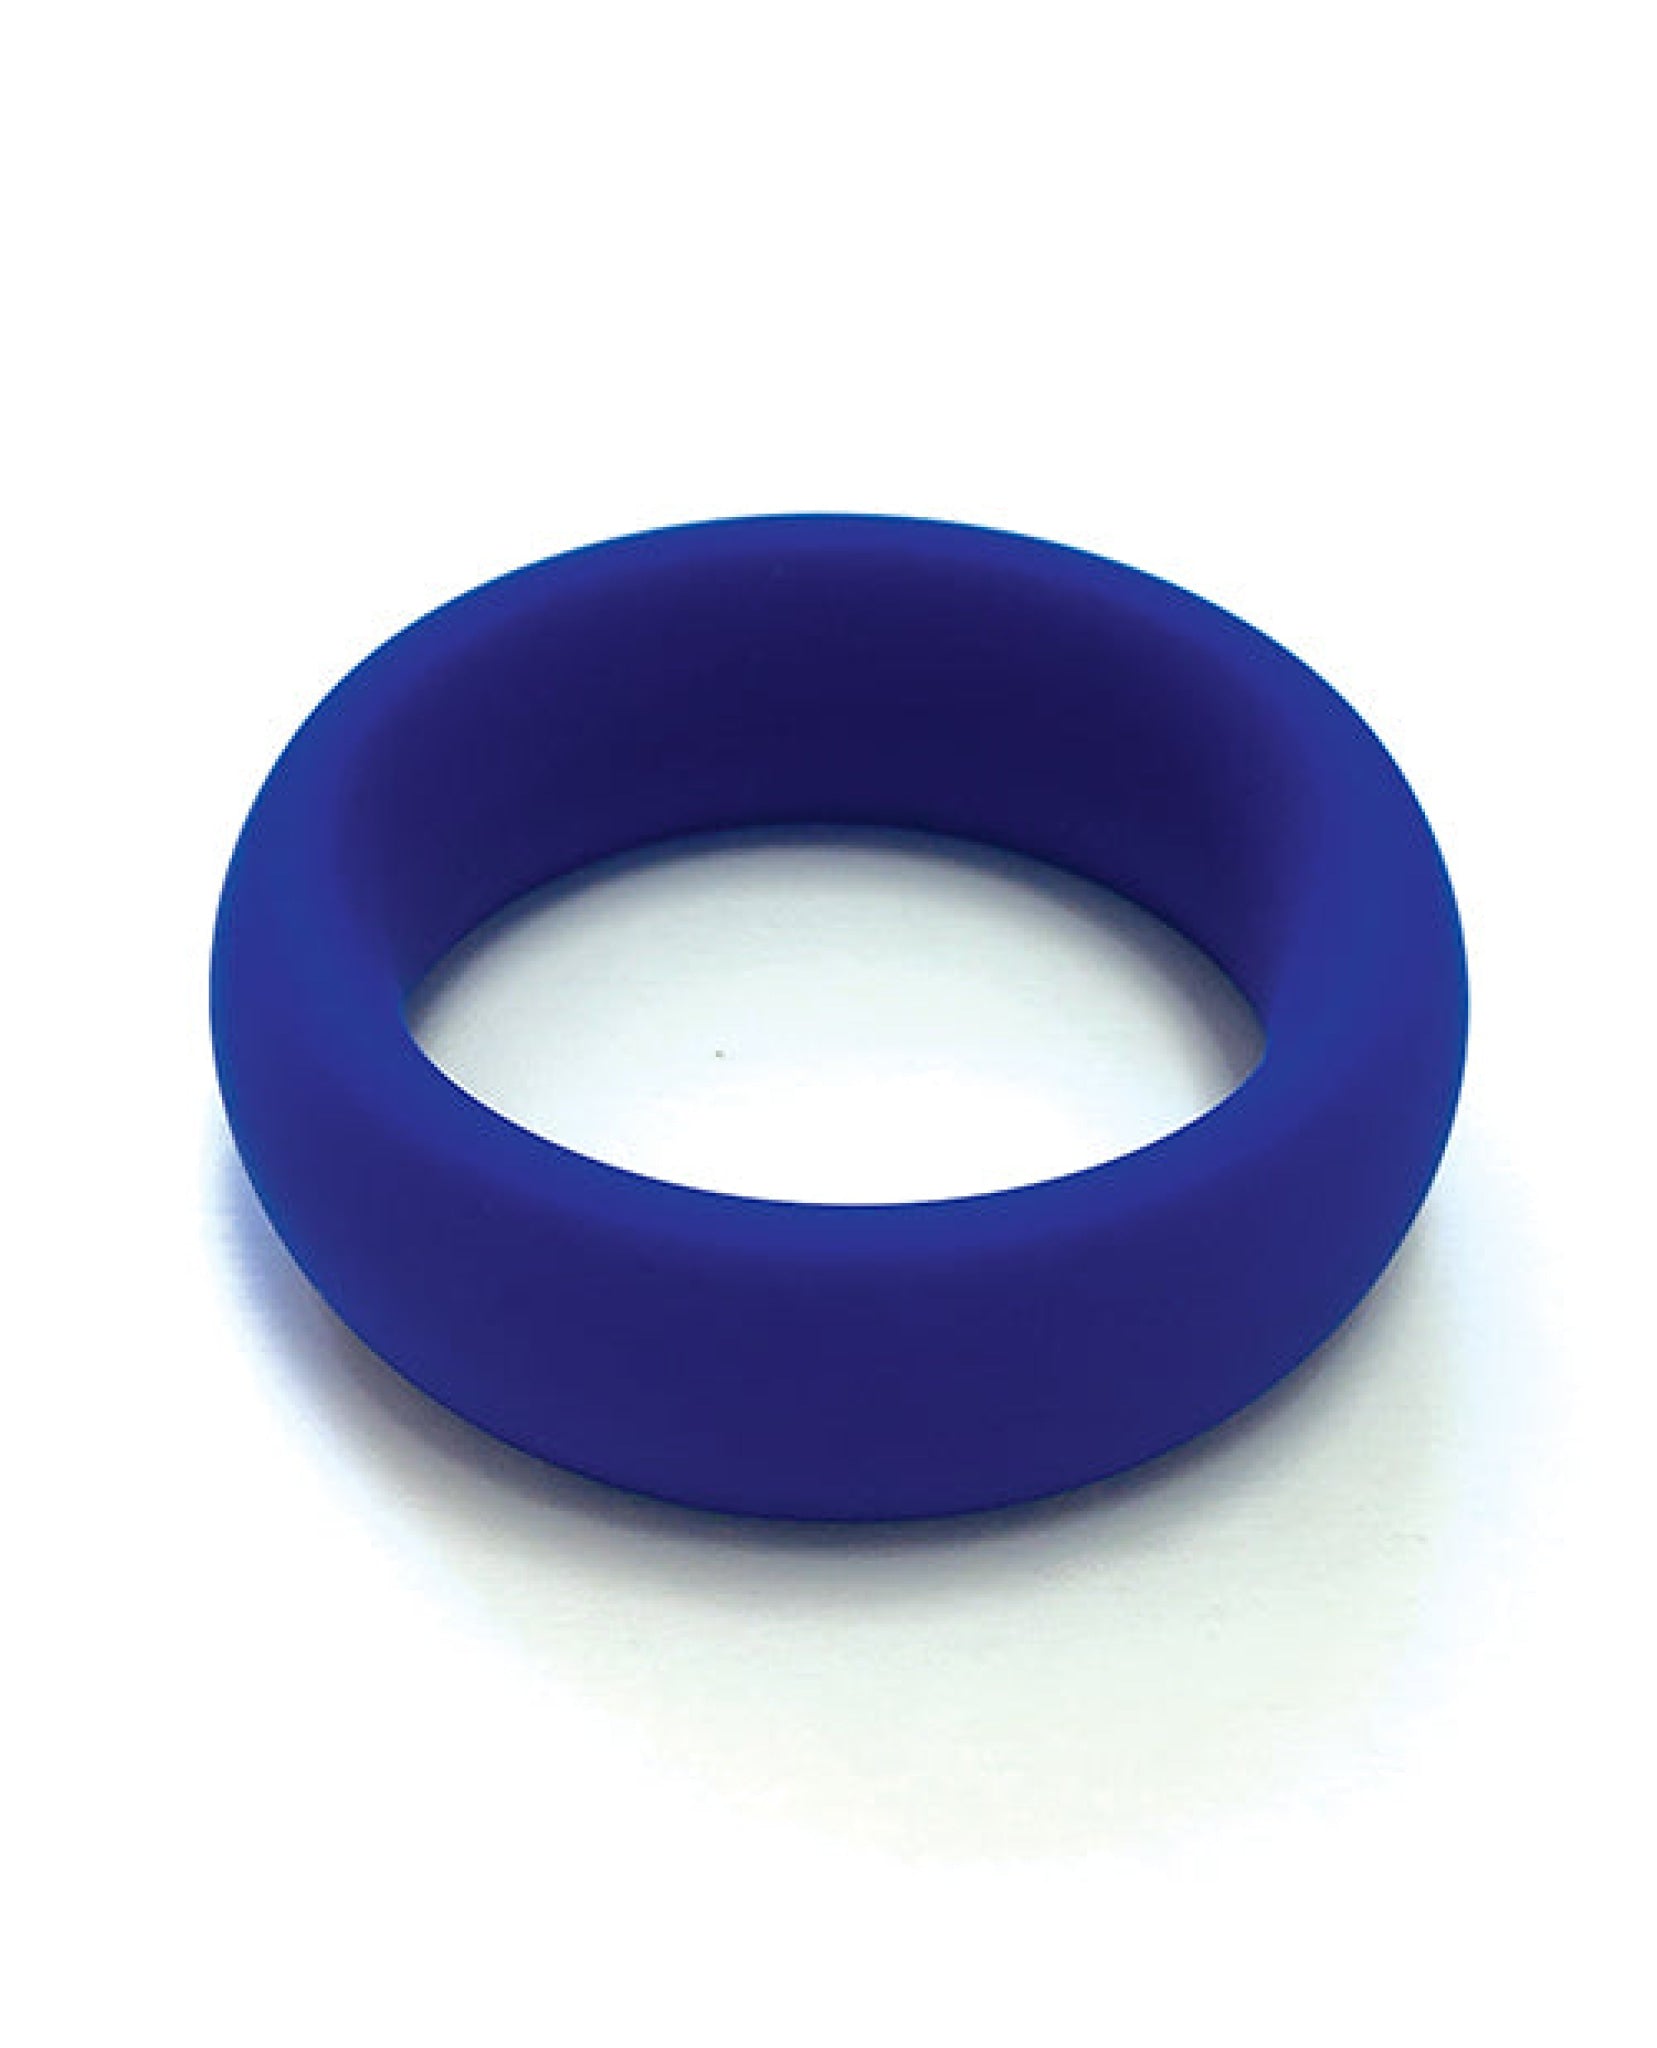 Spartacus 1.75" Wide Silicone Donut Ring - Blue Spartacus